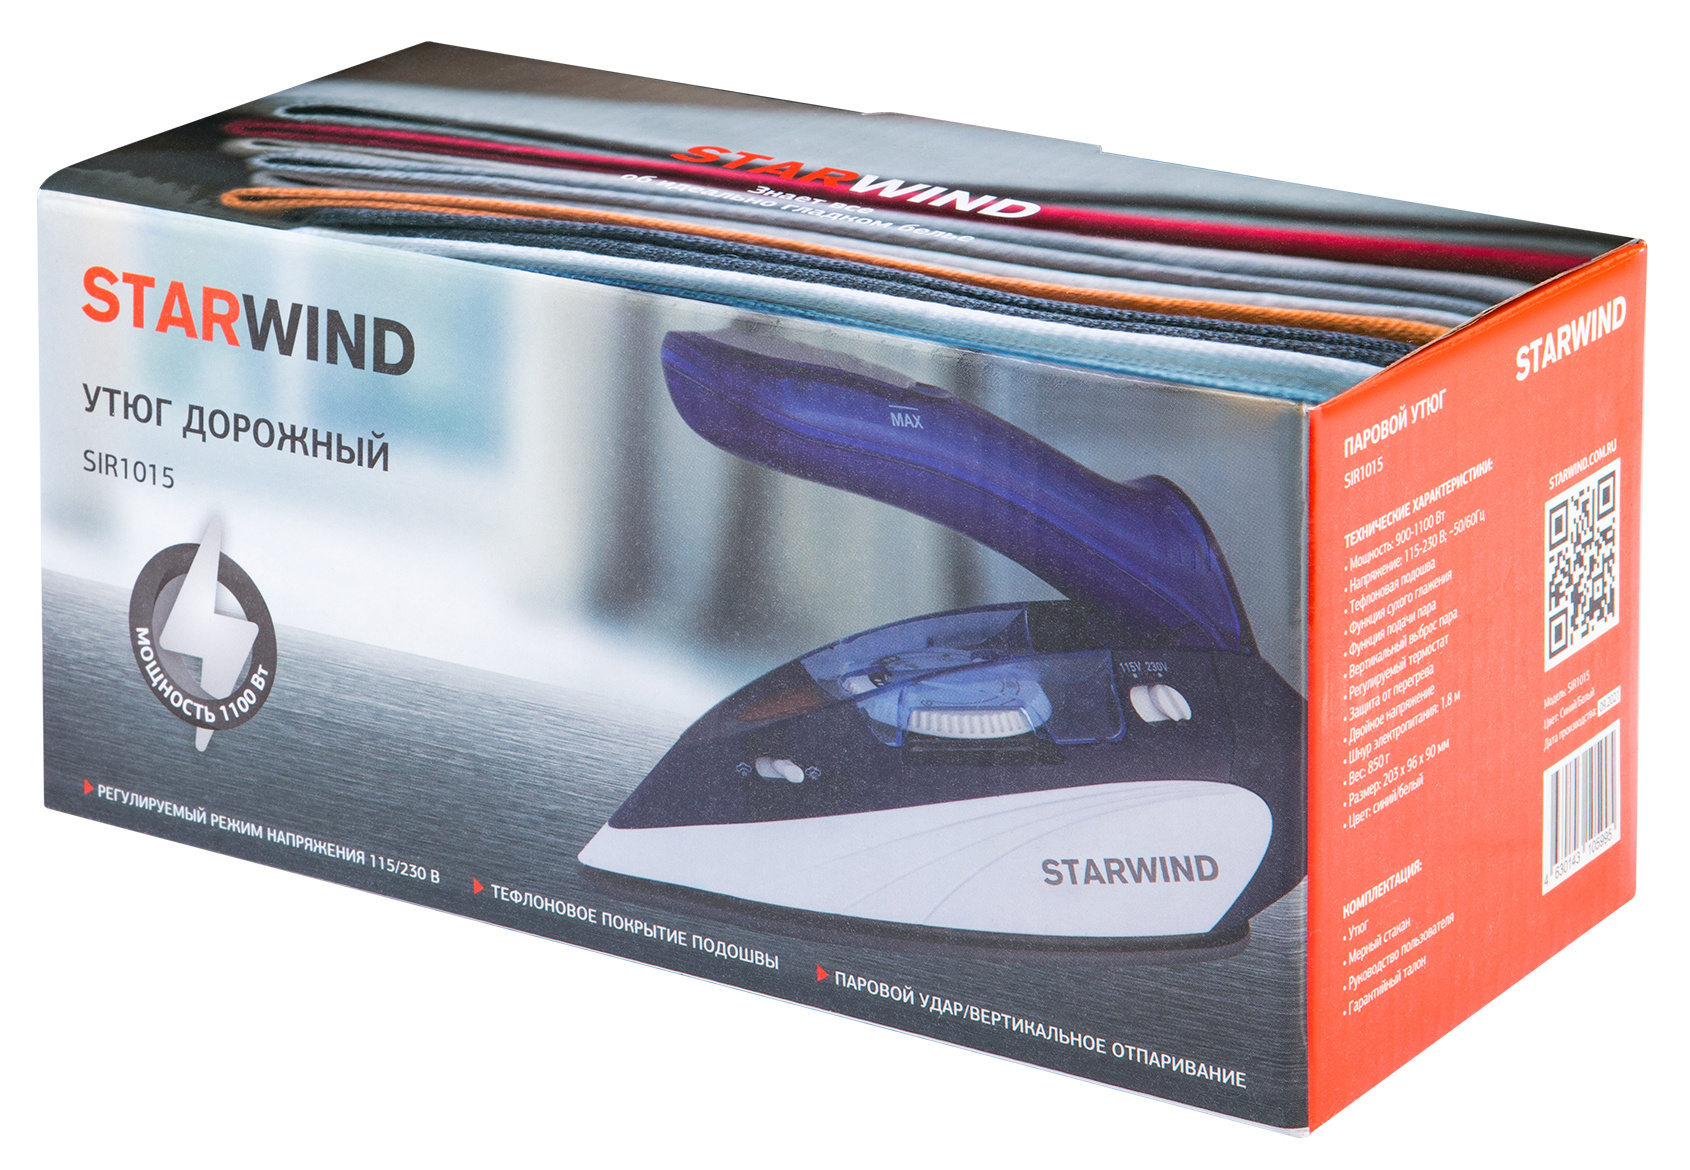 Дорожный утюг Starwind SIR1015 синий/белый от магазина Старвинд